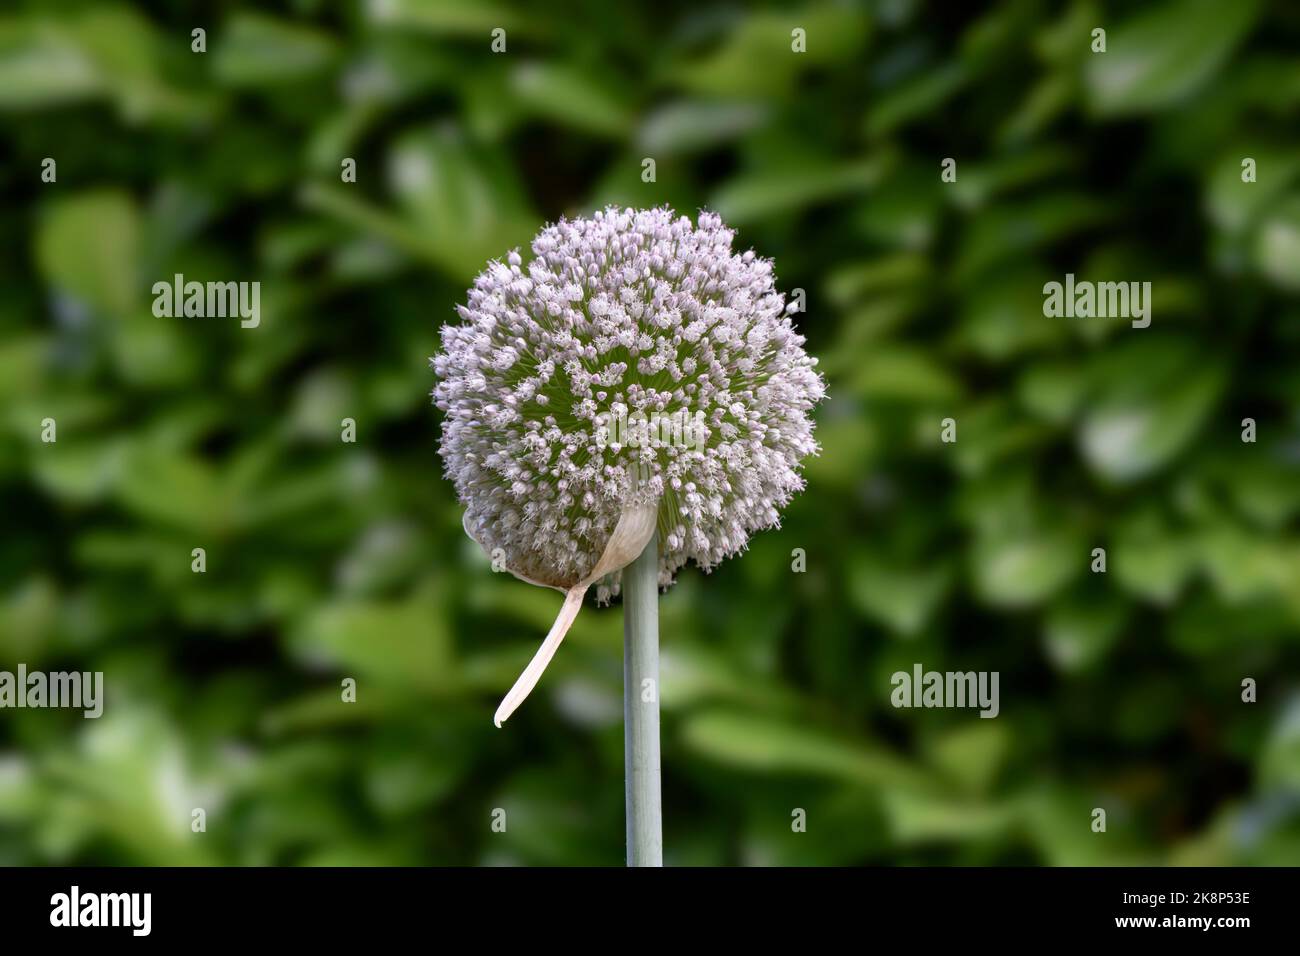 Close up view of a leek flower head, Allium ampeloprasum (Allium porrum) Stock Photo